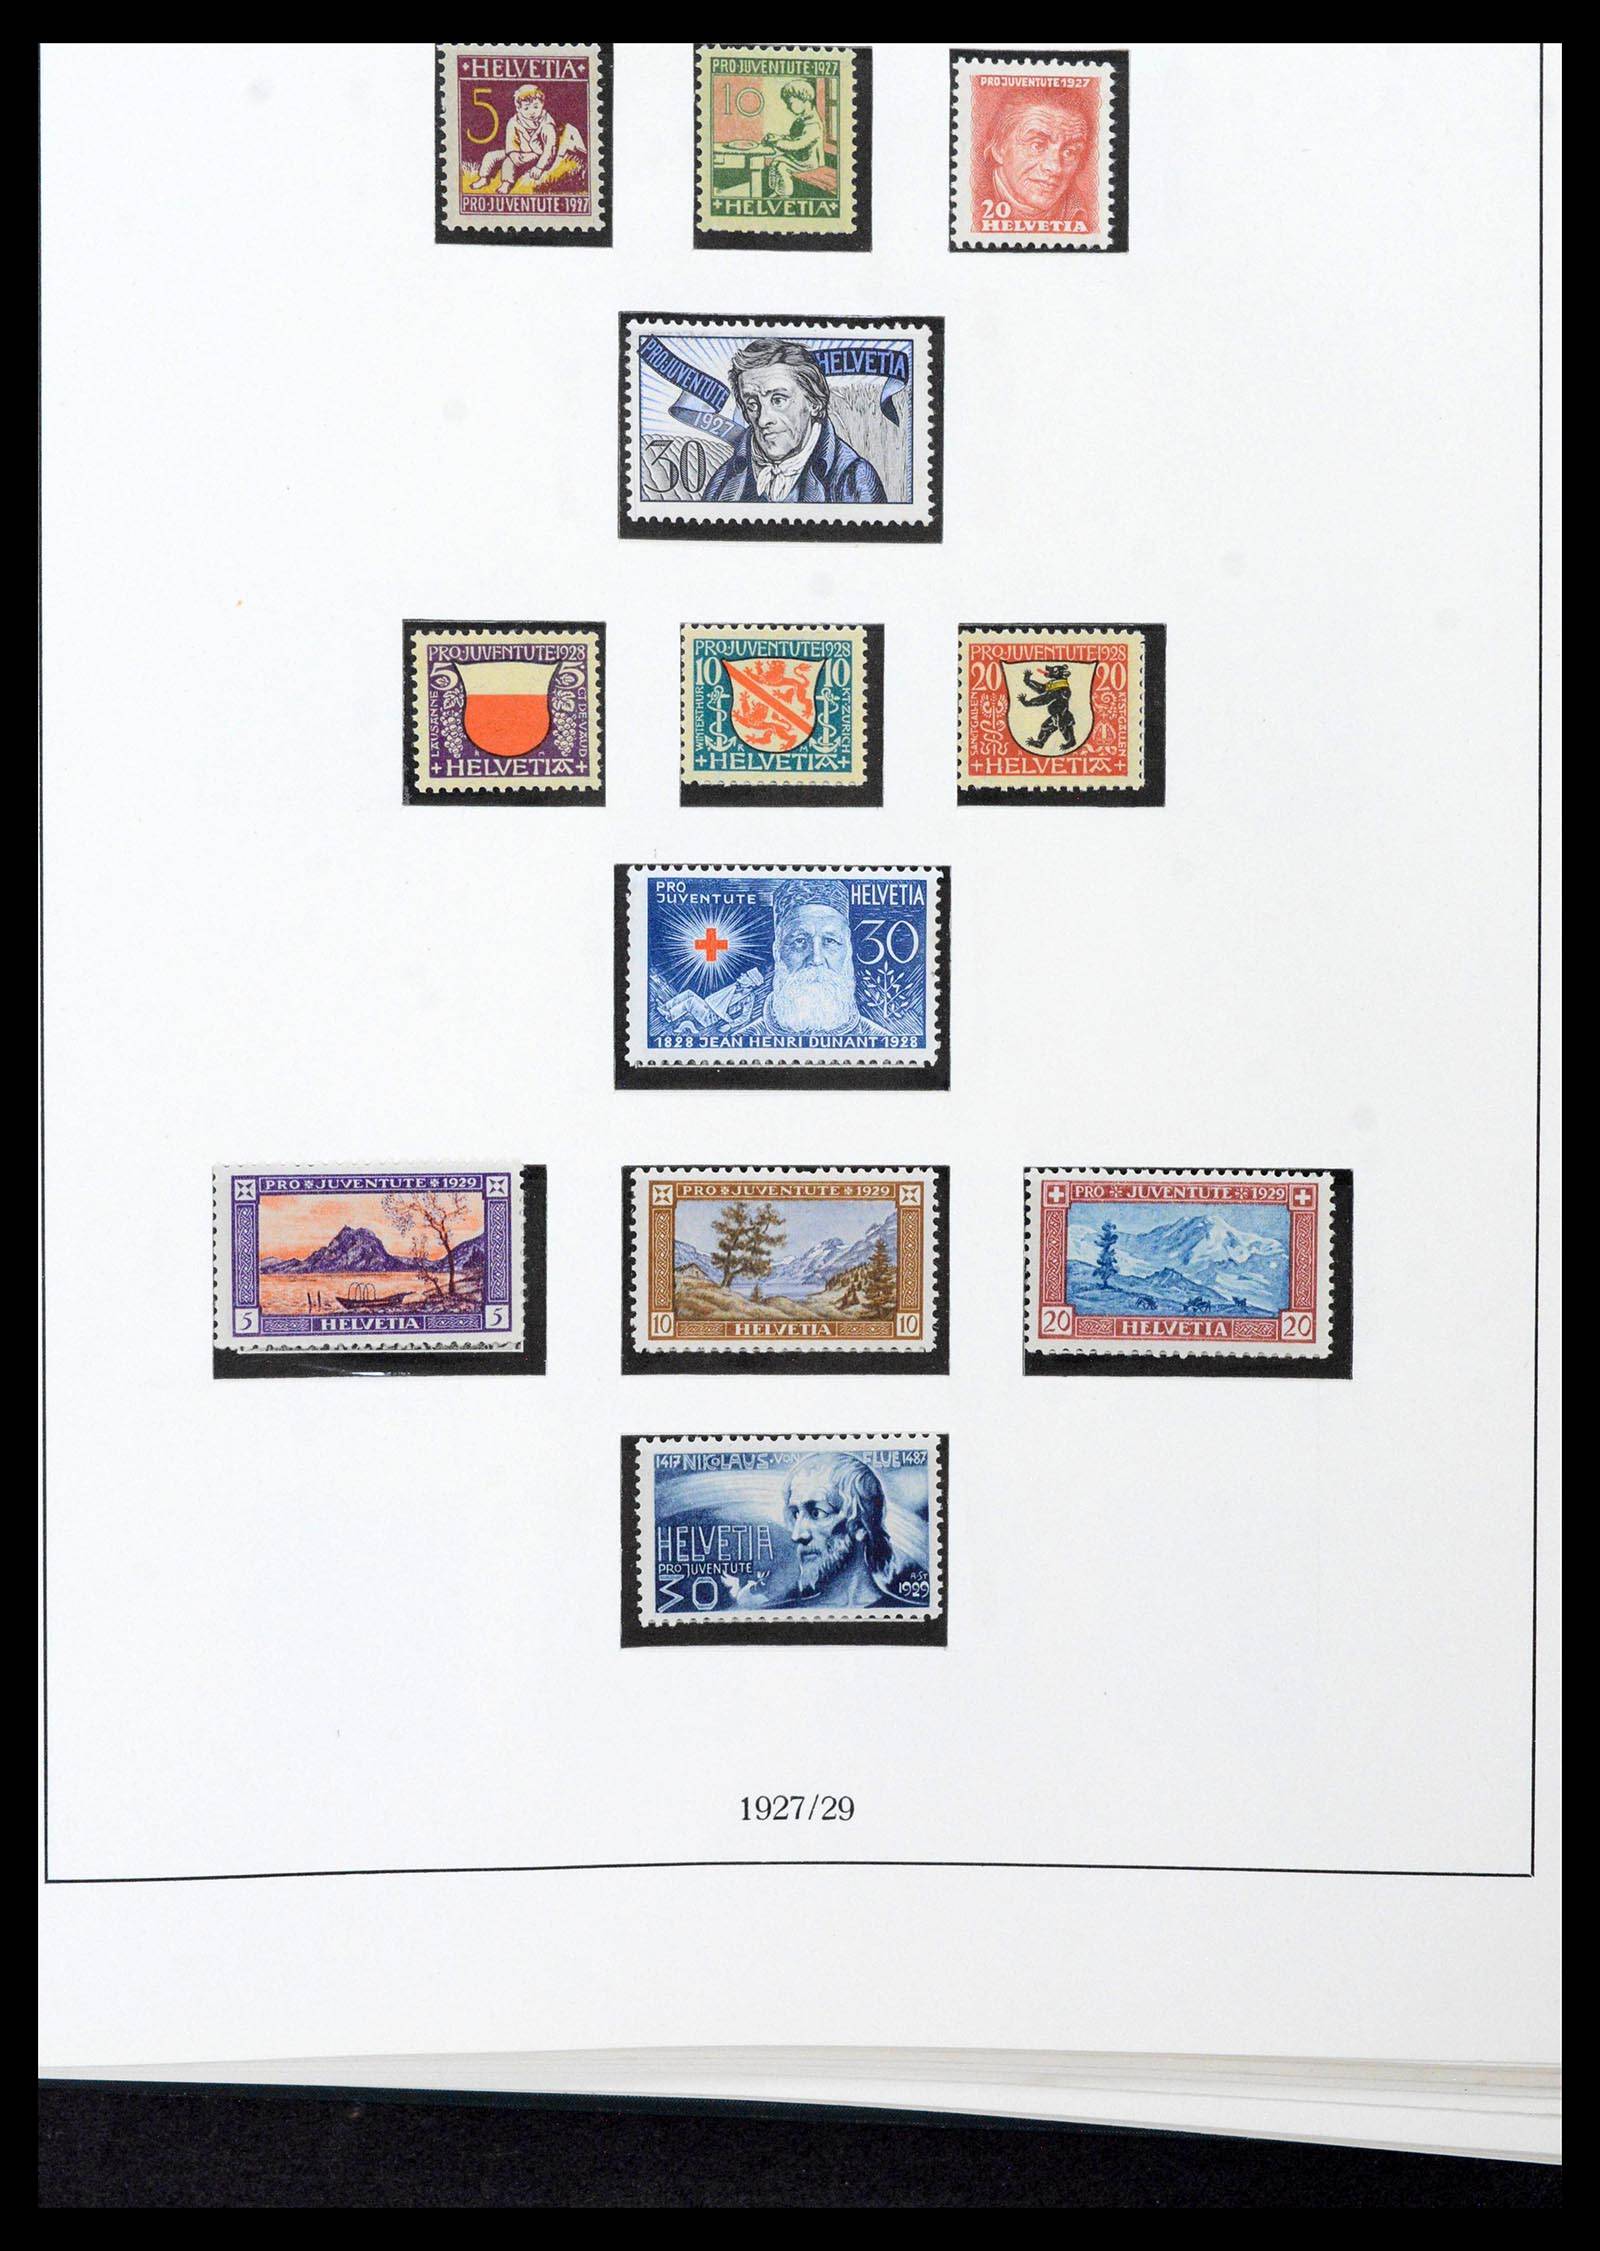 39235 0020 - Stamp collection 39235 Switzerland 1843-1960.